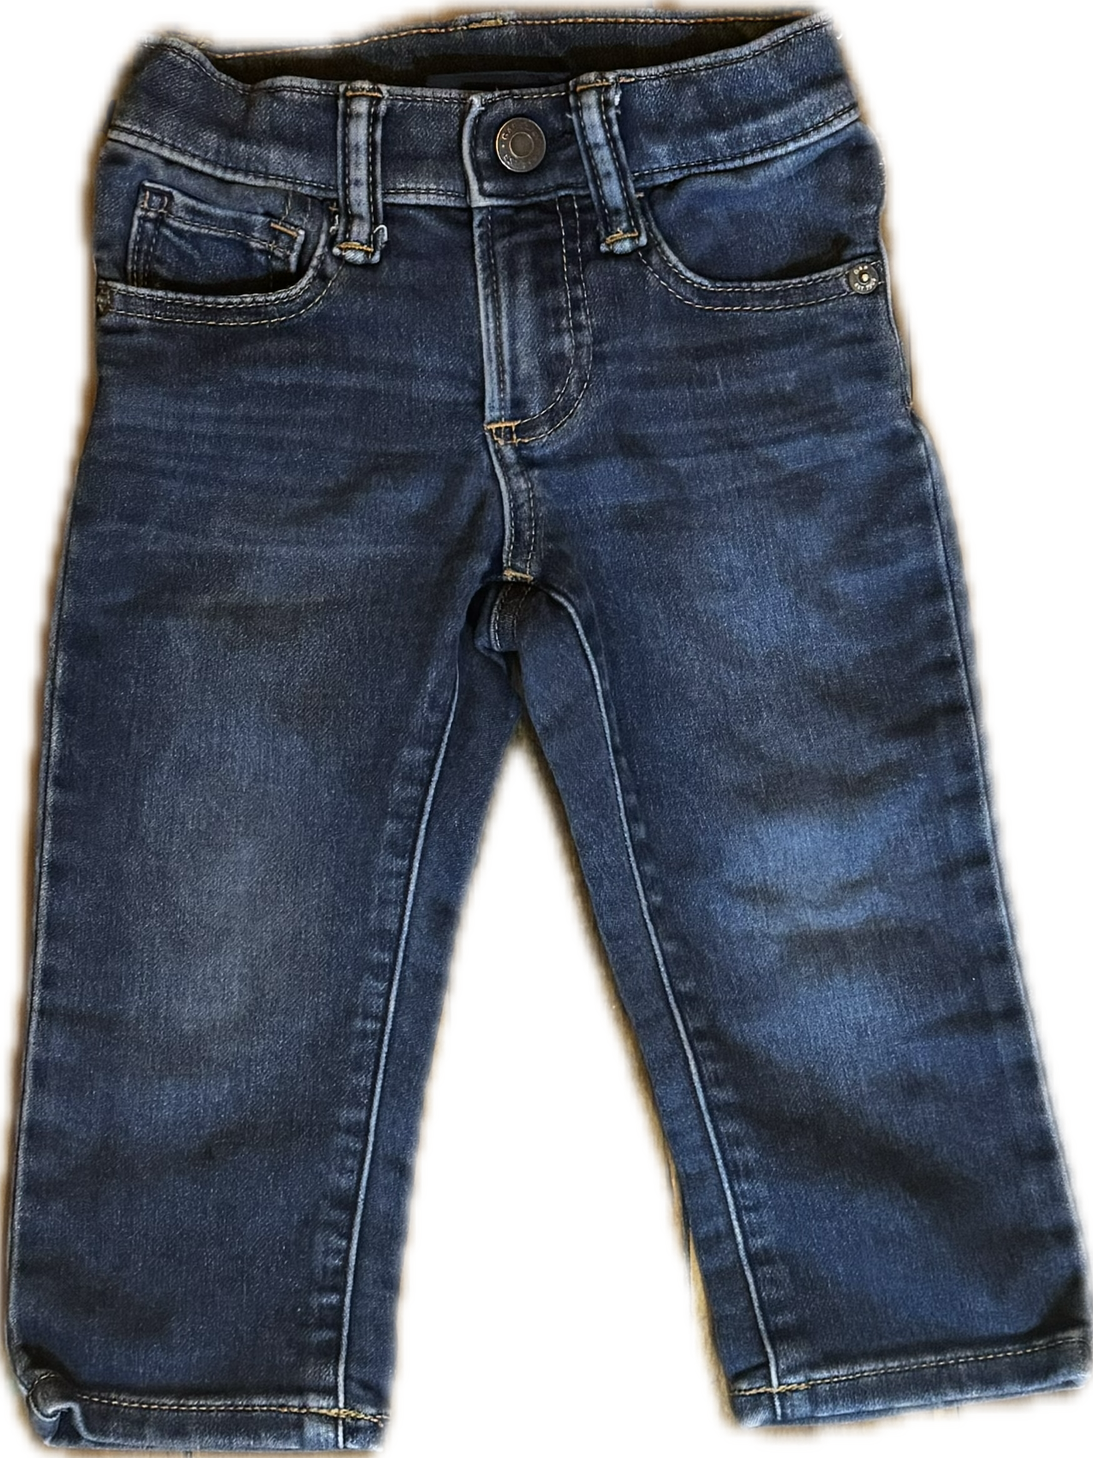 Infant Boys 18 MO Gap Blue Jeans